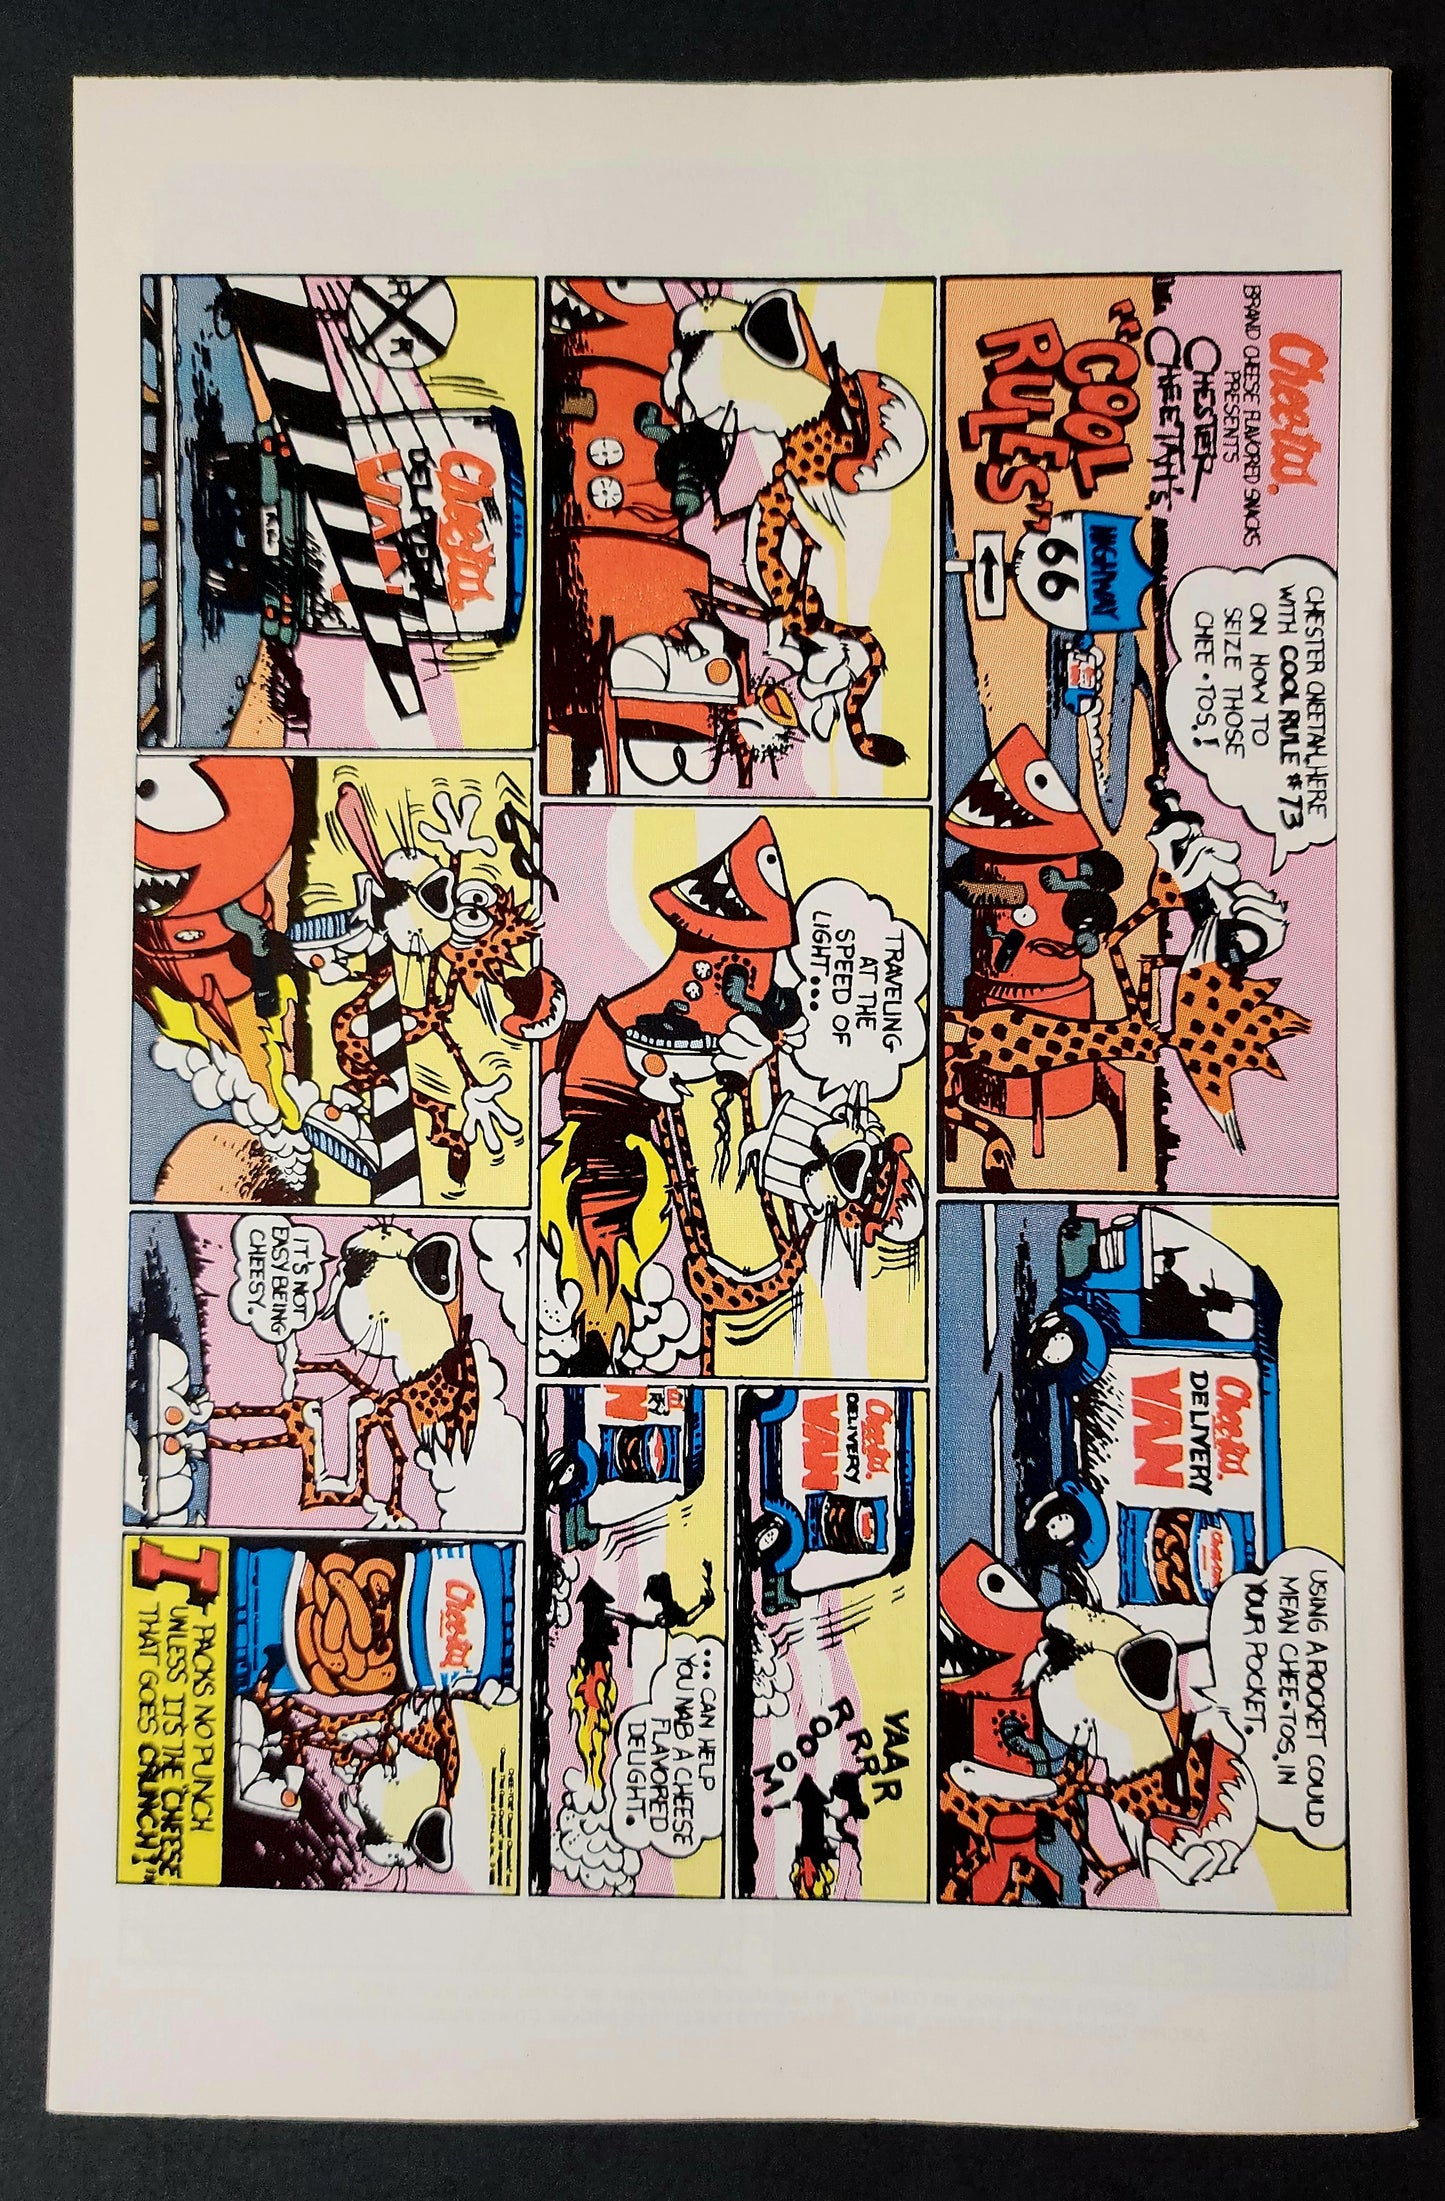 Archie Giant Series Magazine #609 (VF)